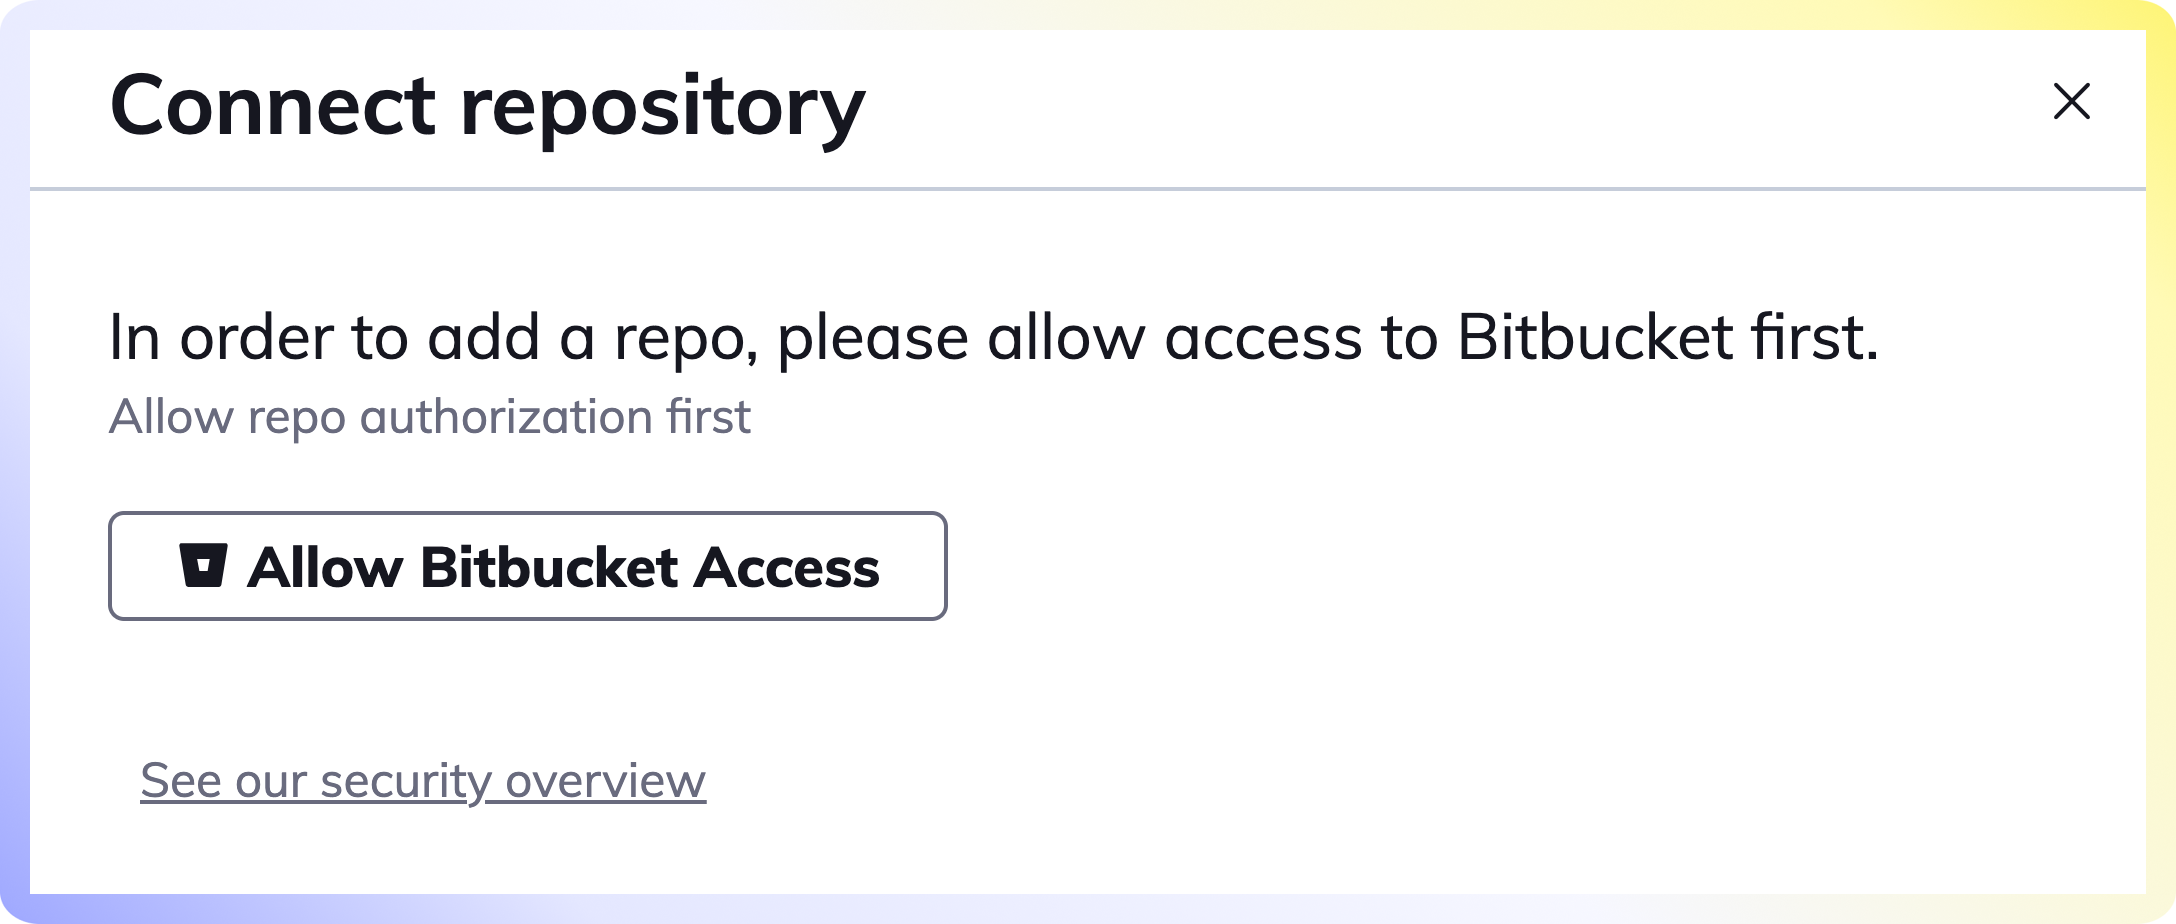 Allow Bitbucket Access